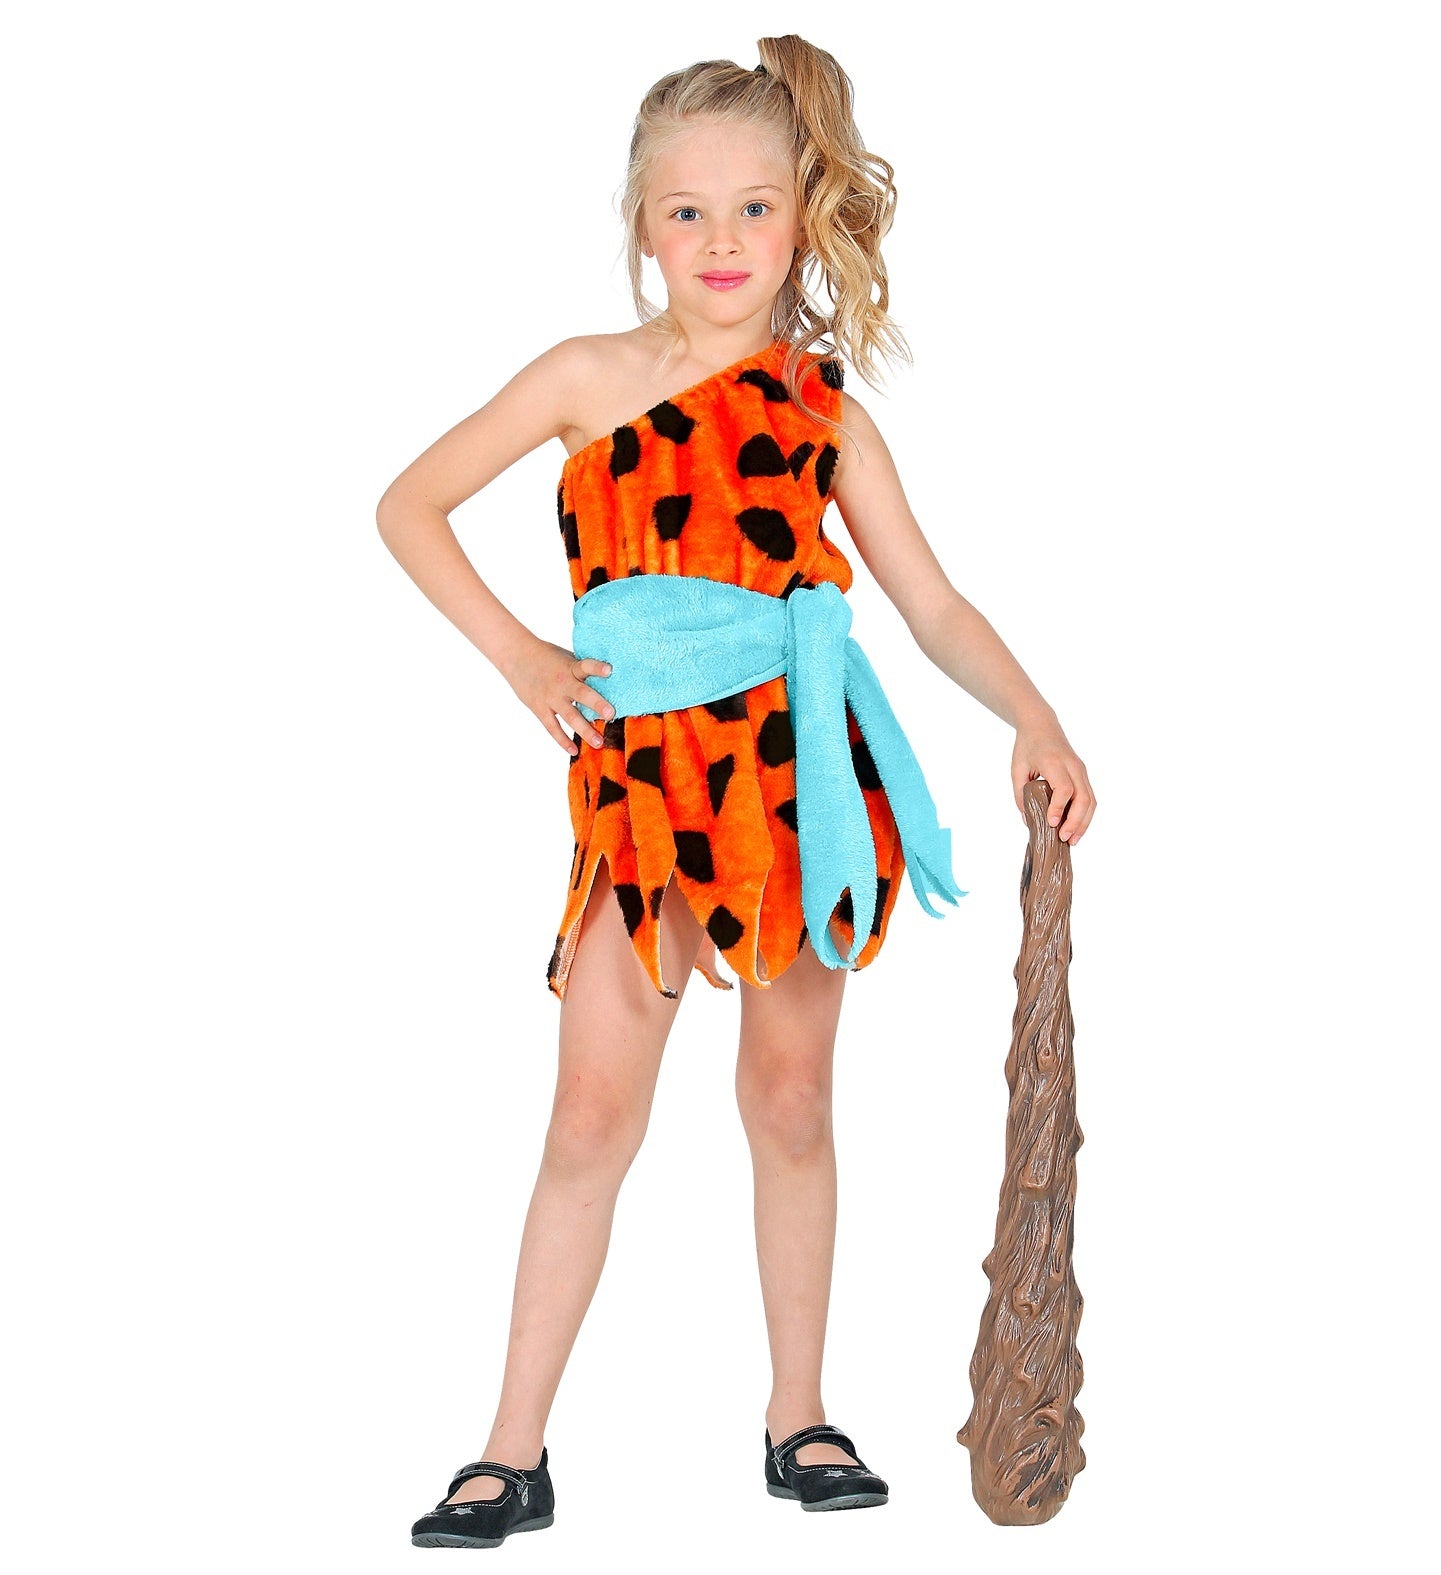 Widmann - The Flintstones Kostuum - Pebbles Flinsteen - Meisje - blauw,oranje - Maat 104 - Carnavalskleding - Verkleedkleding